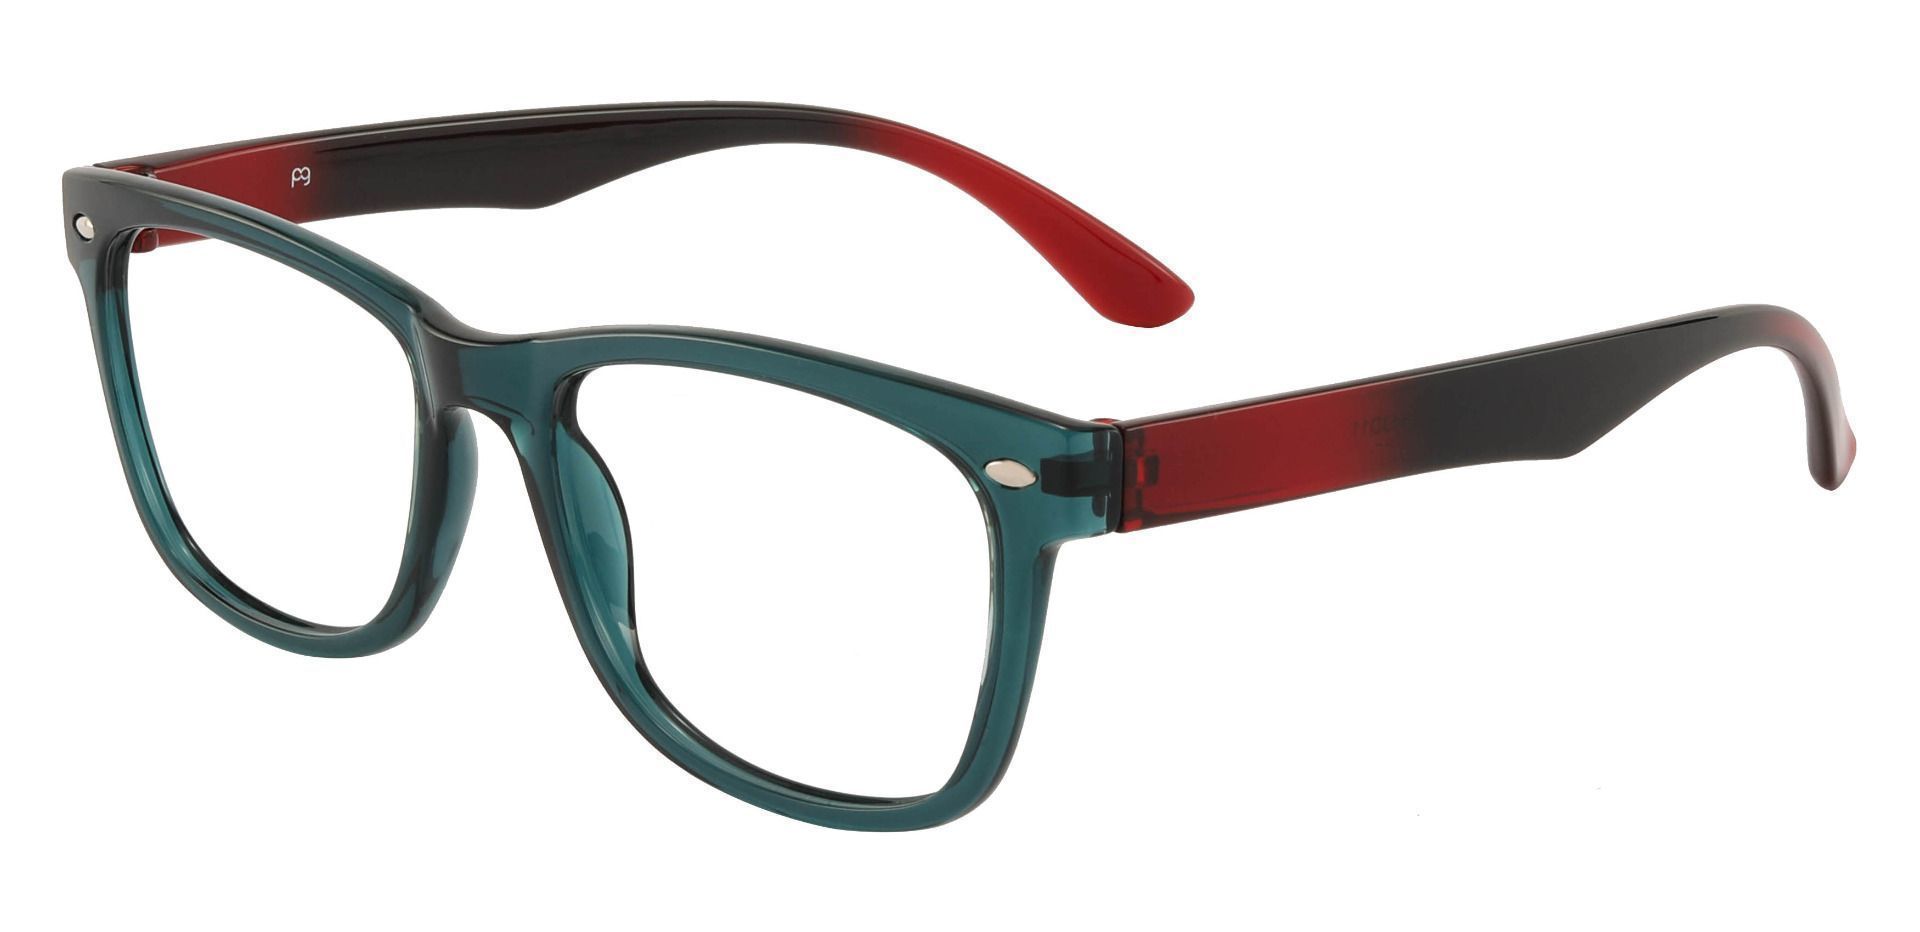 Oscar Rectangle Lined Bifocal Glasses - Green